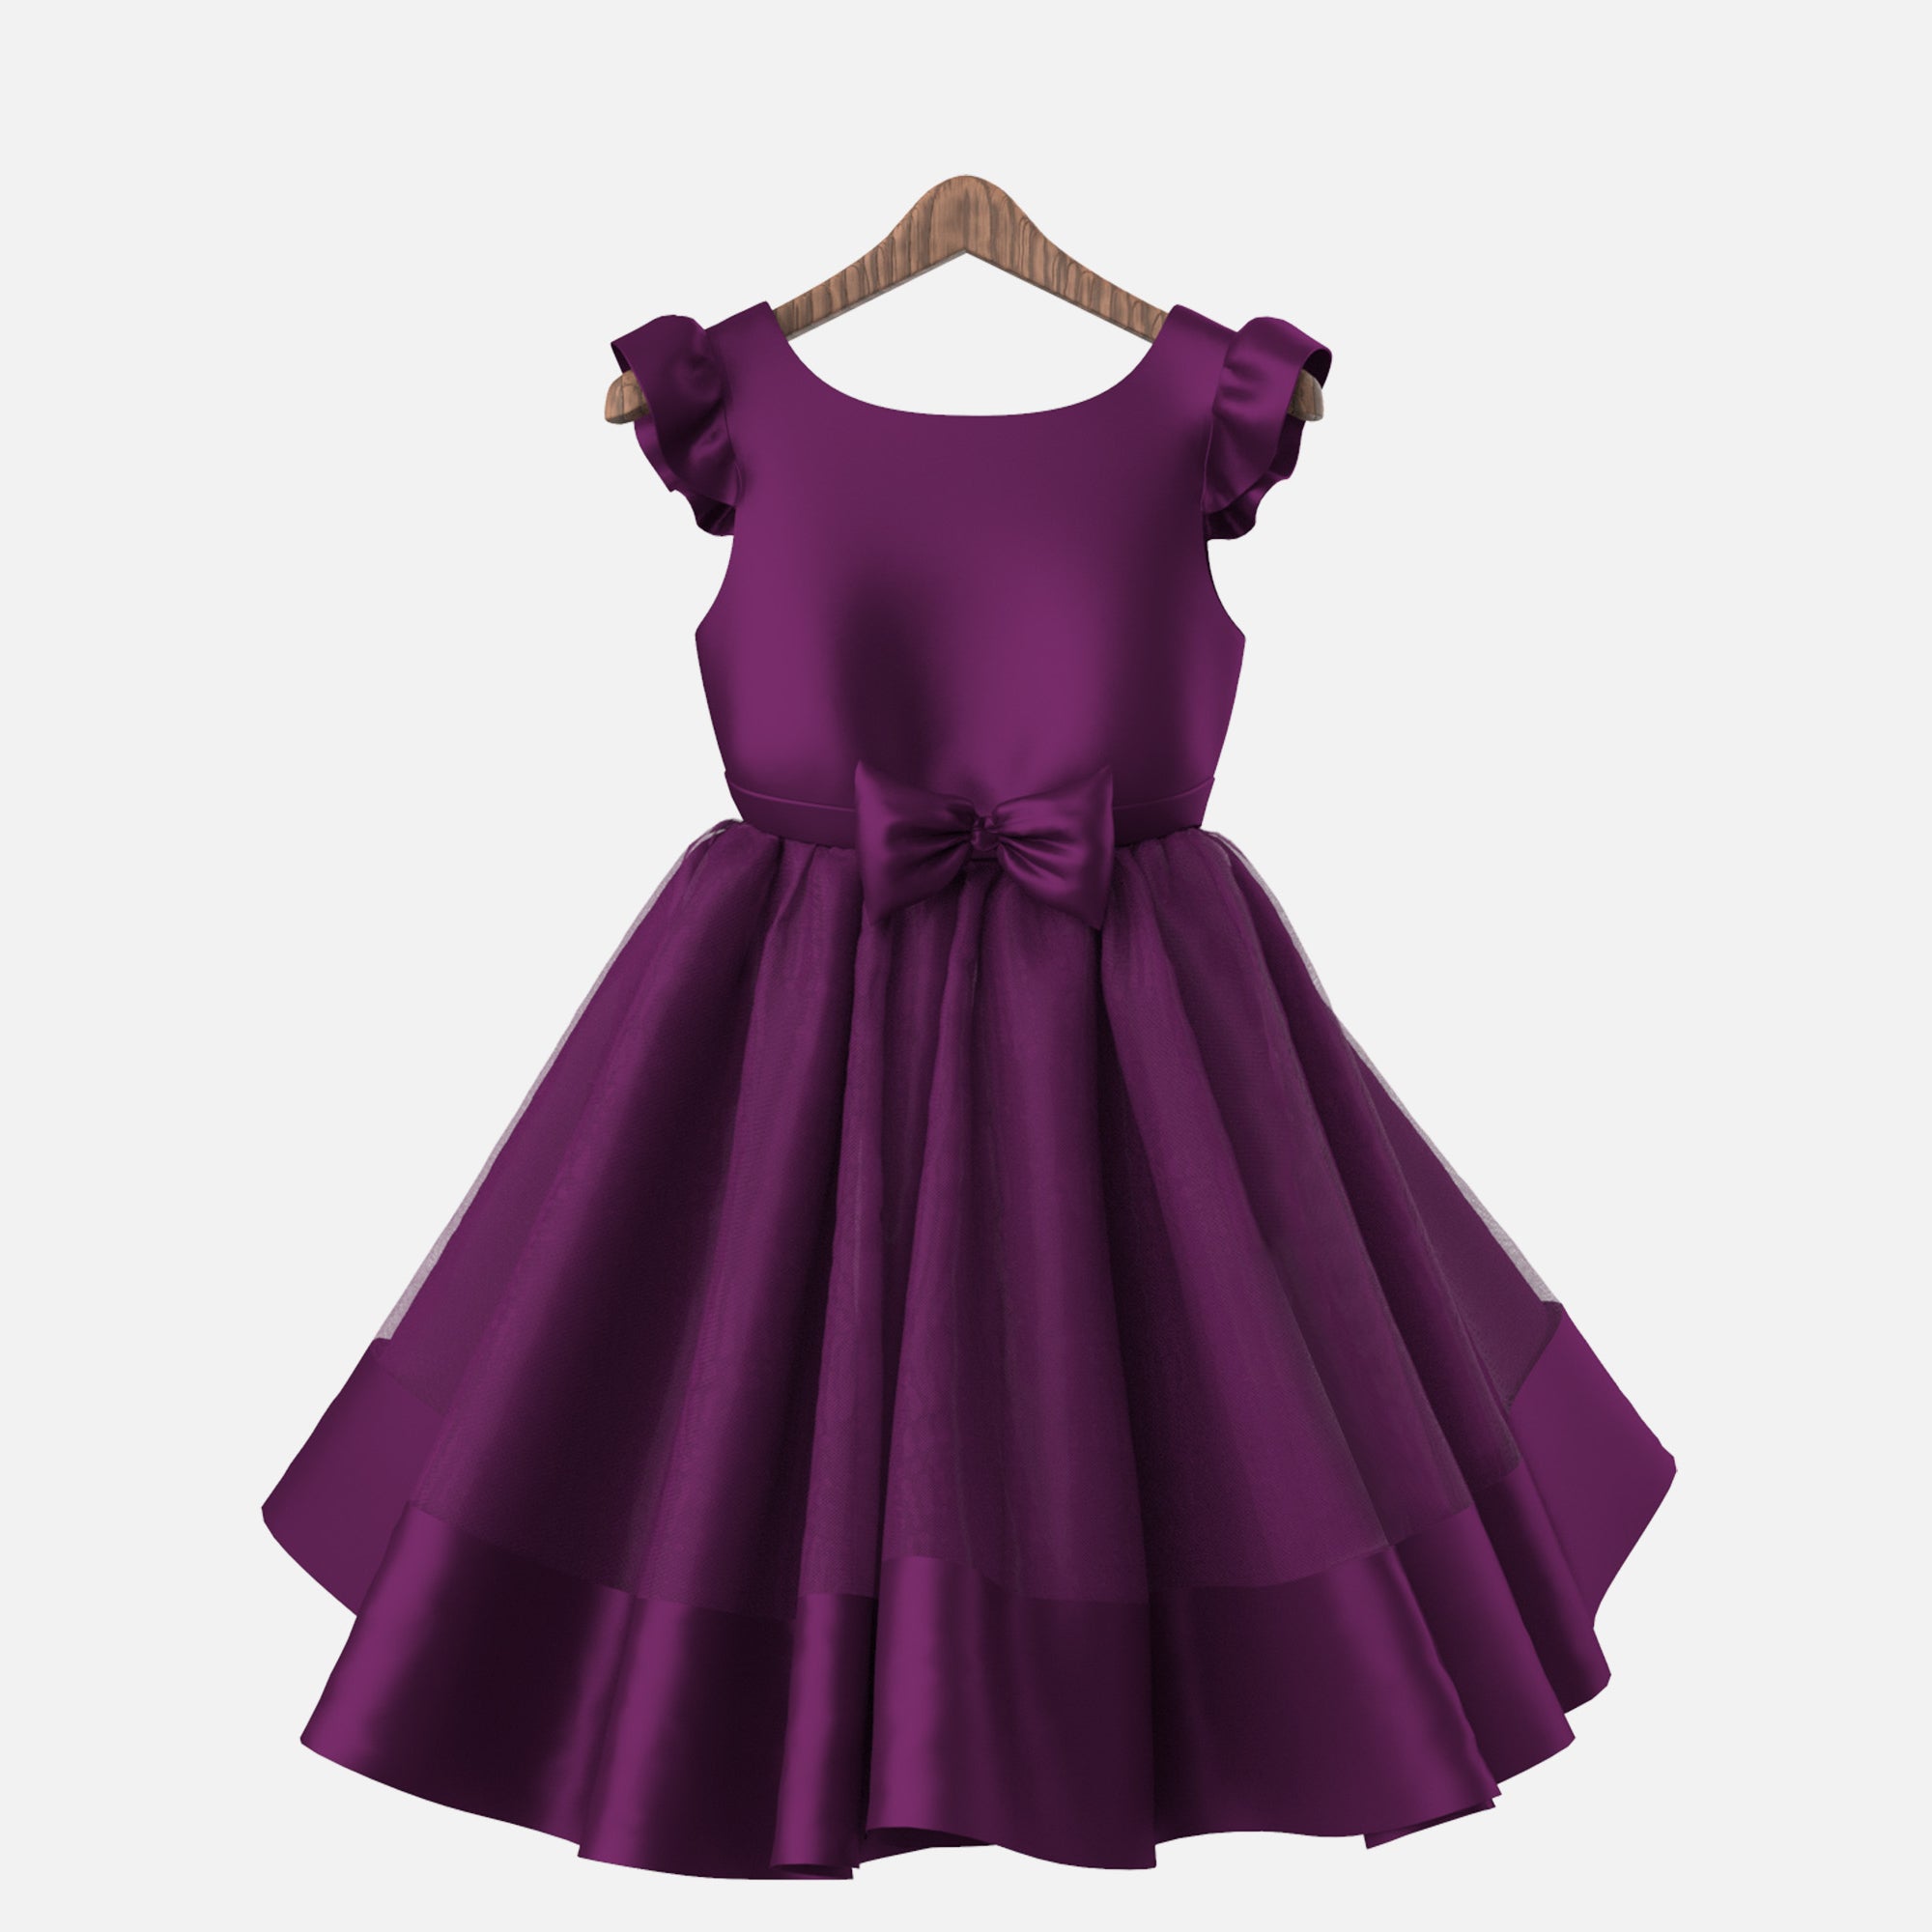 Buy Black Lace and Satin Dress Online- Lirose Fashion – lirose